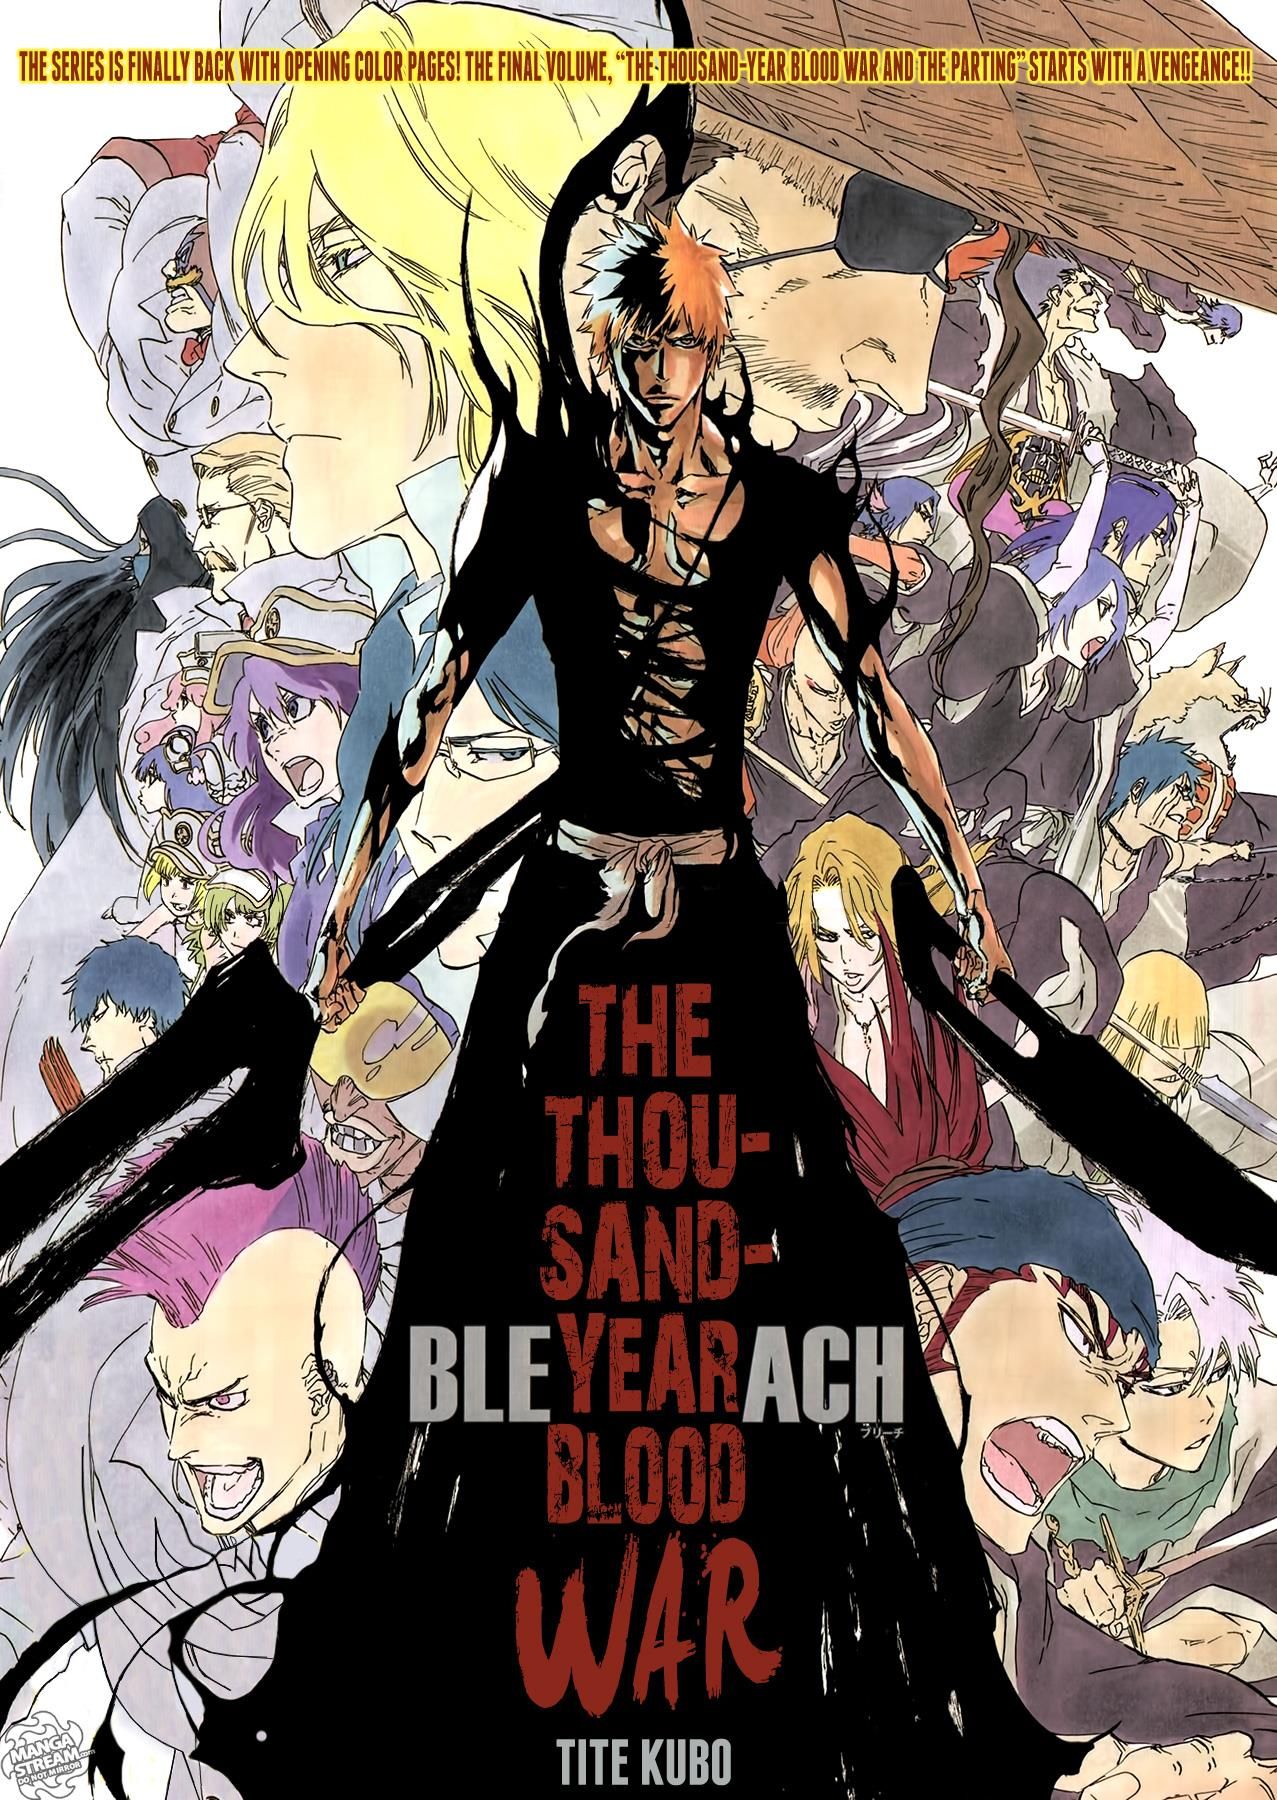 Shubham on Bleach Thousand Year Blood War Arc Anime and